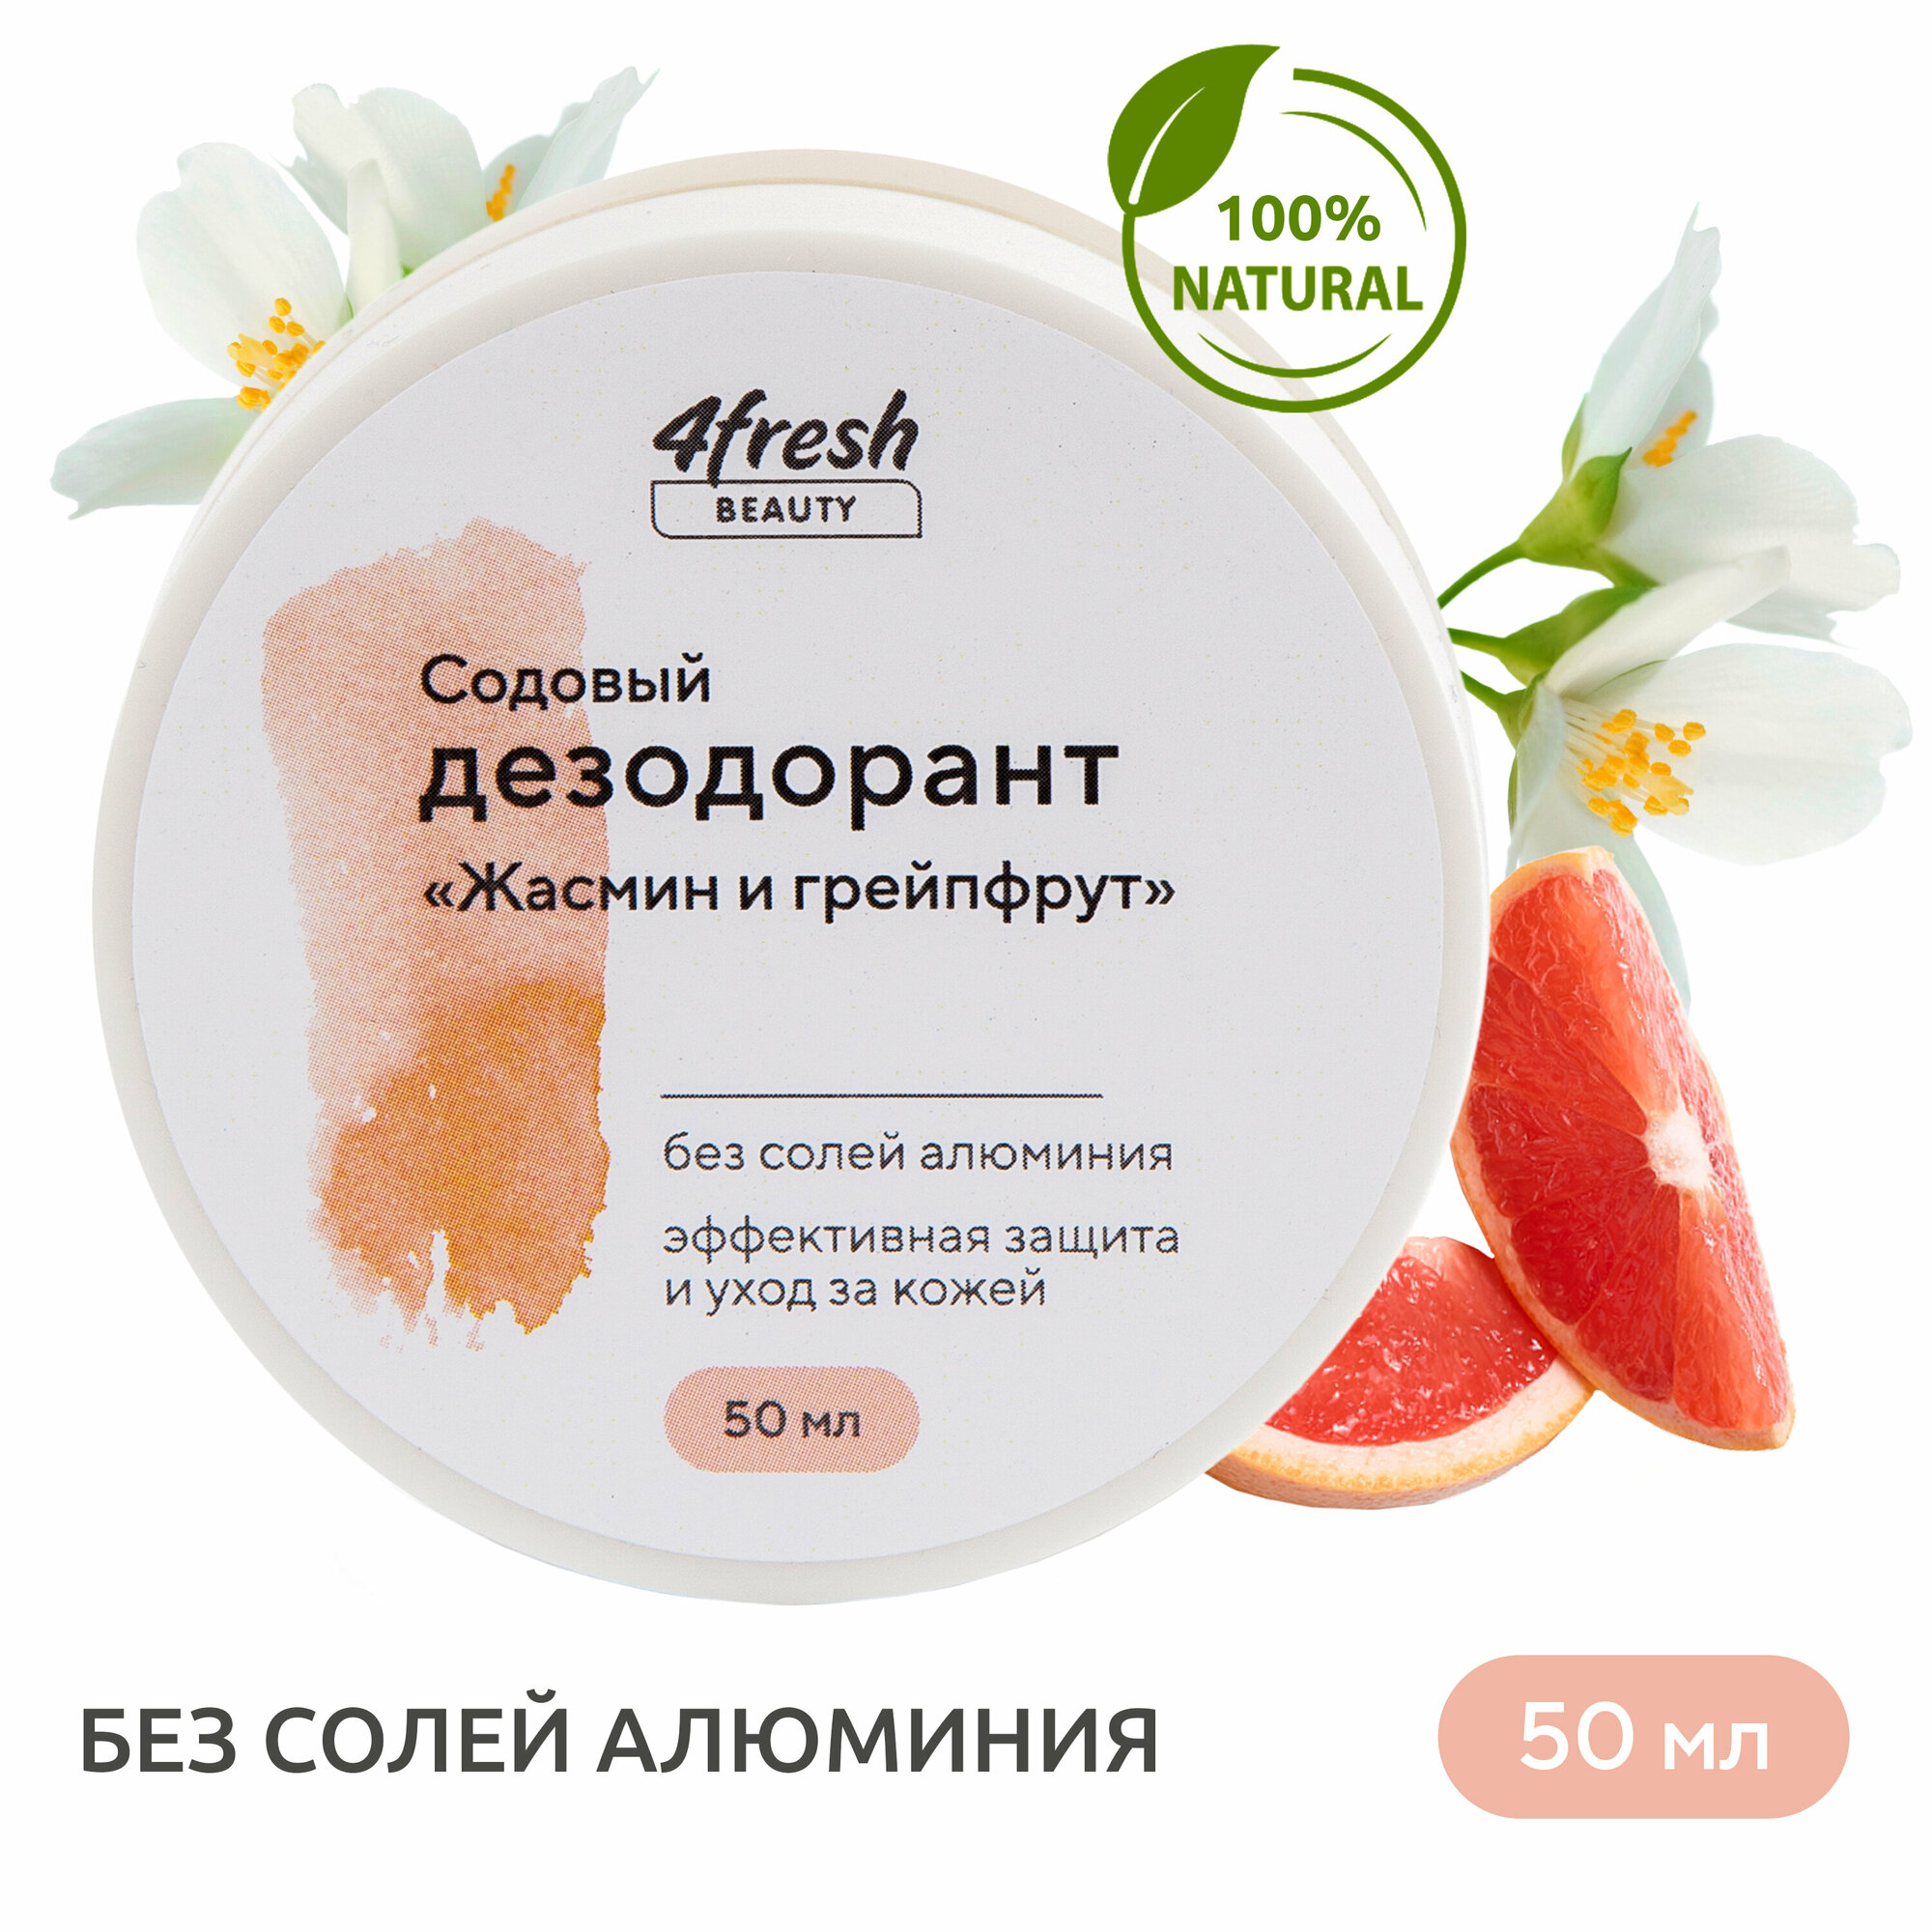 Дезодорант 4fresh BEAUTY содовый "Жасмин и грейпфрут" 50 г